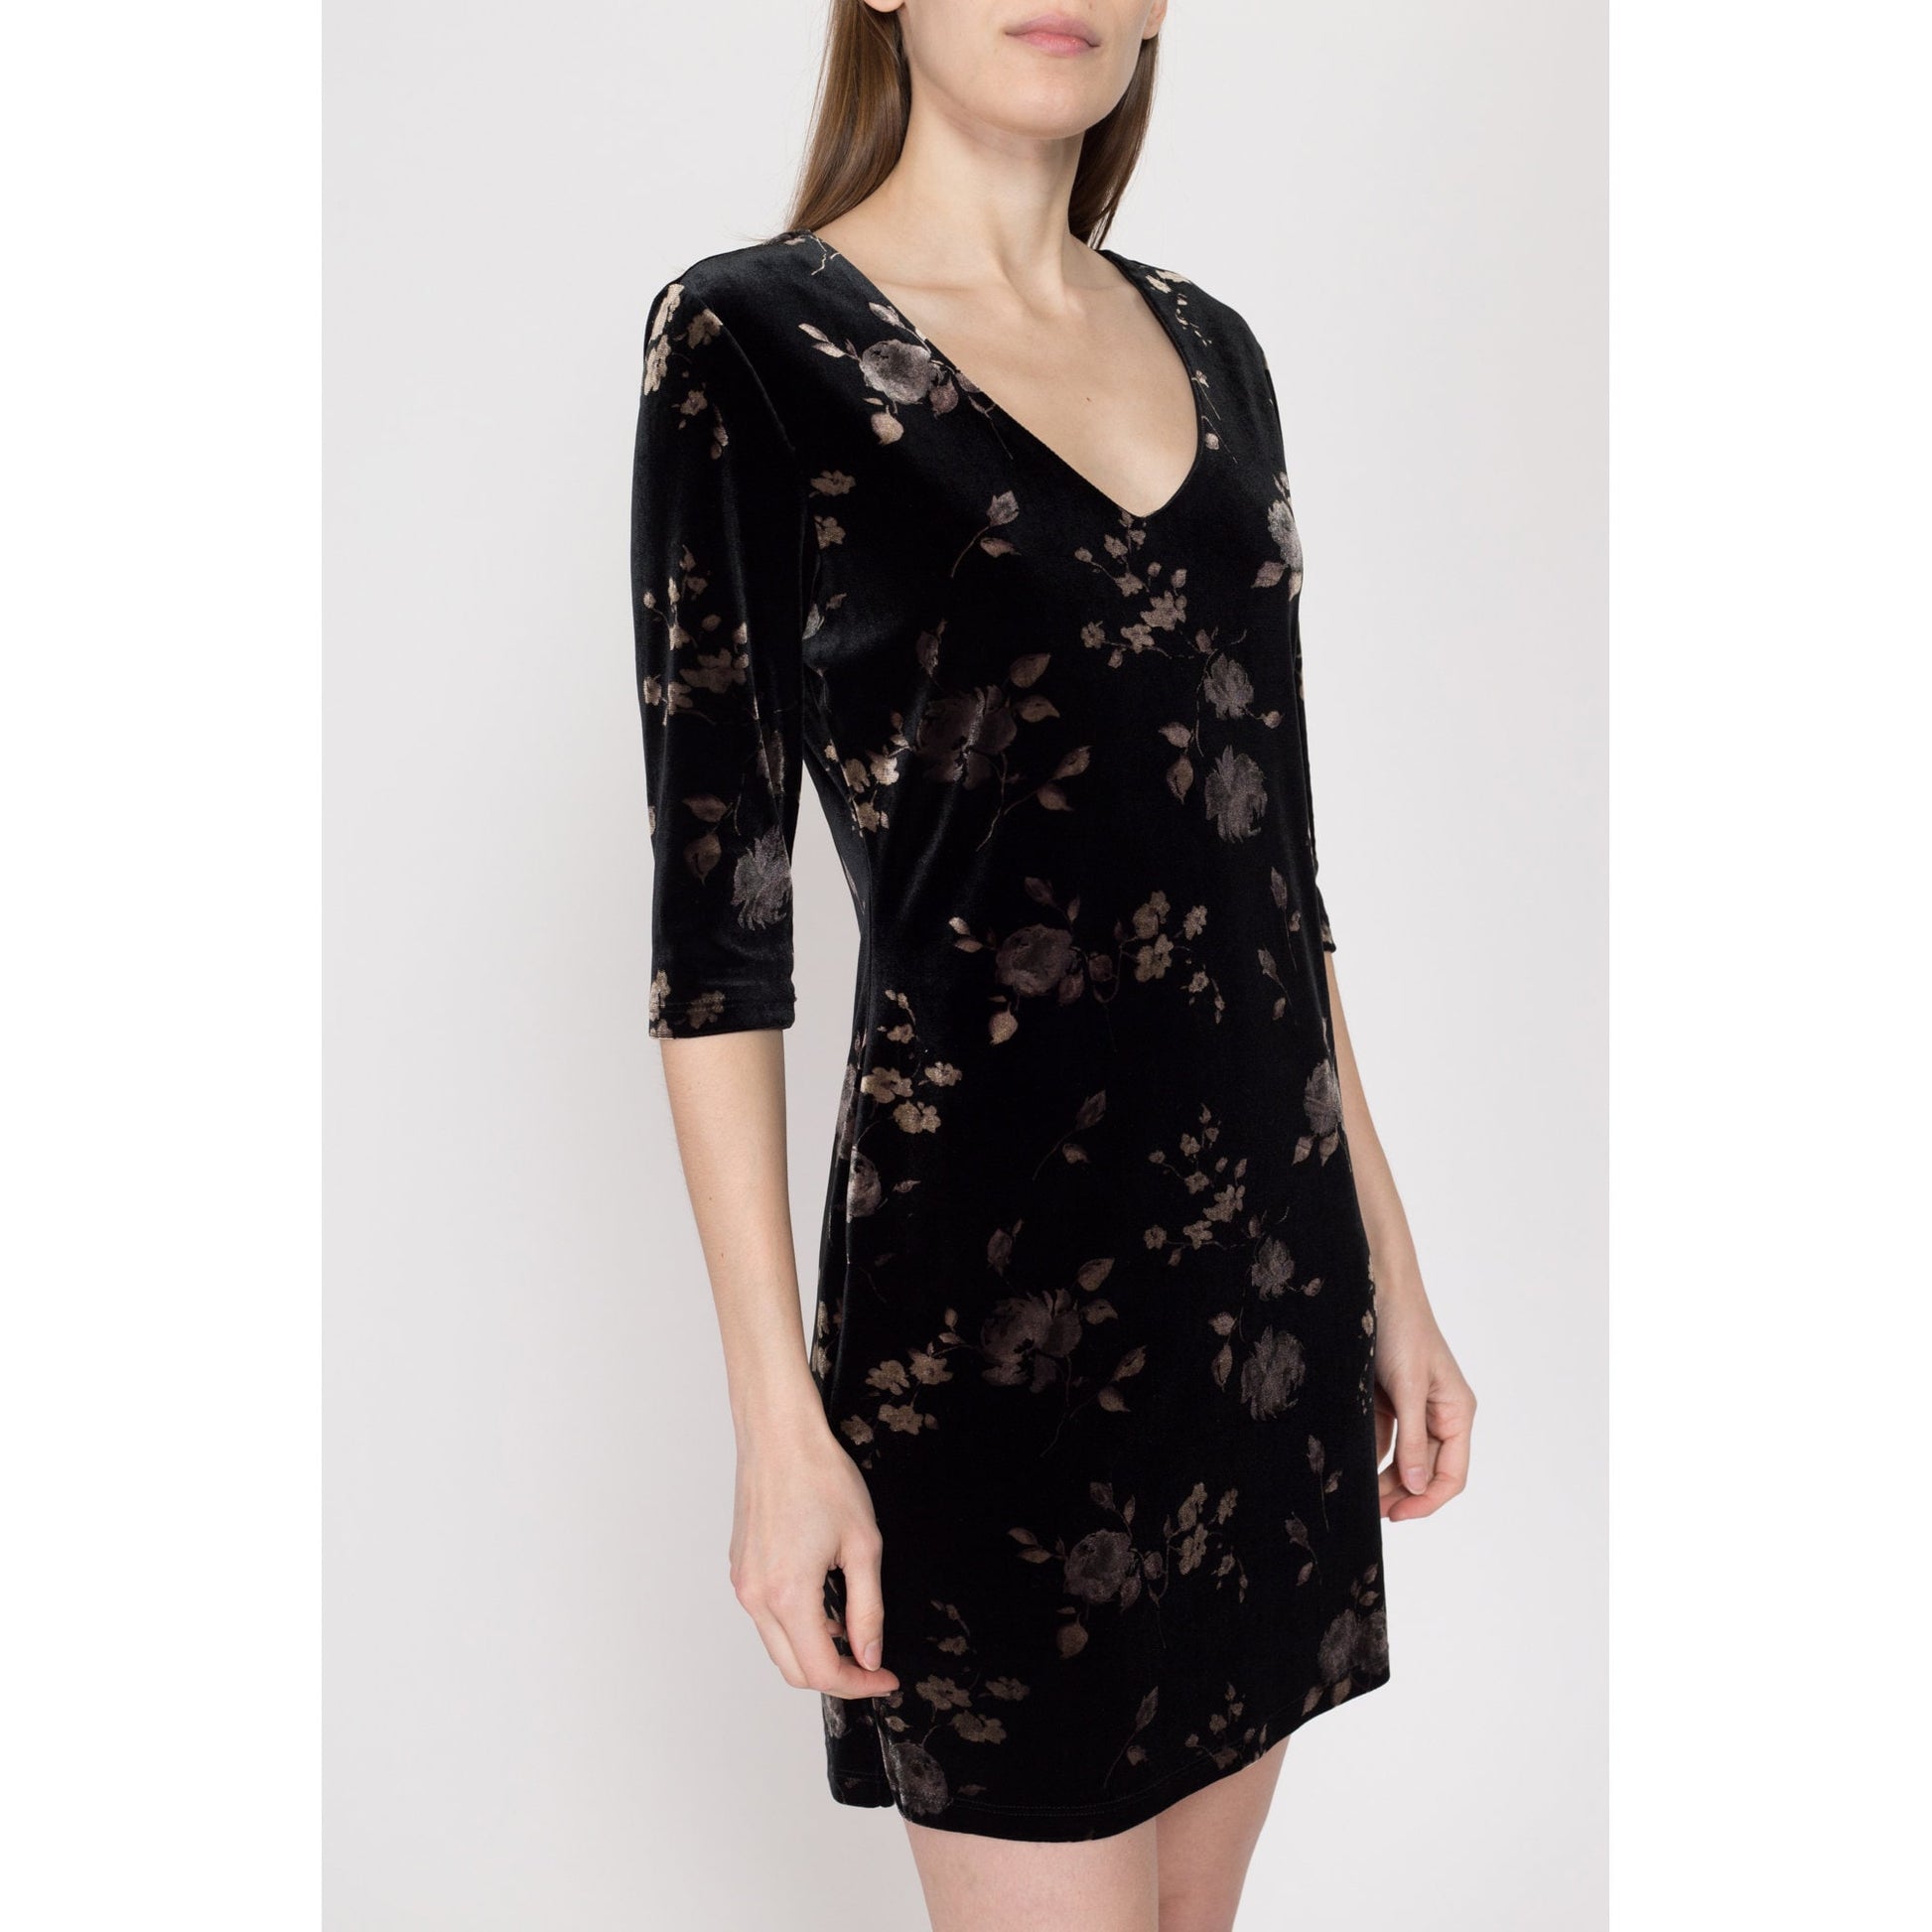 Medium 90s Black Floral Velvet 3/4 Sleeve Mini Dress | Vintage Grunge V Neck Stretchy Bodycon Dress